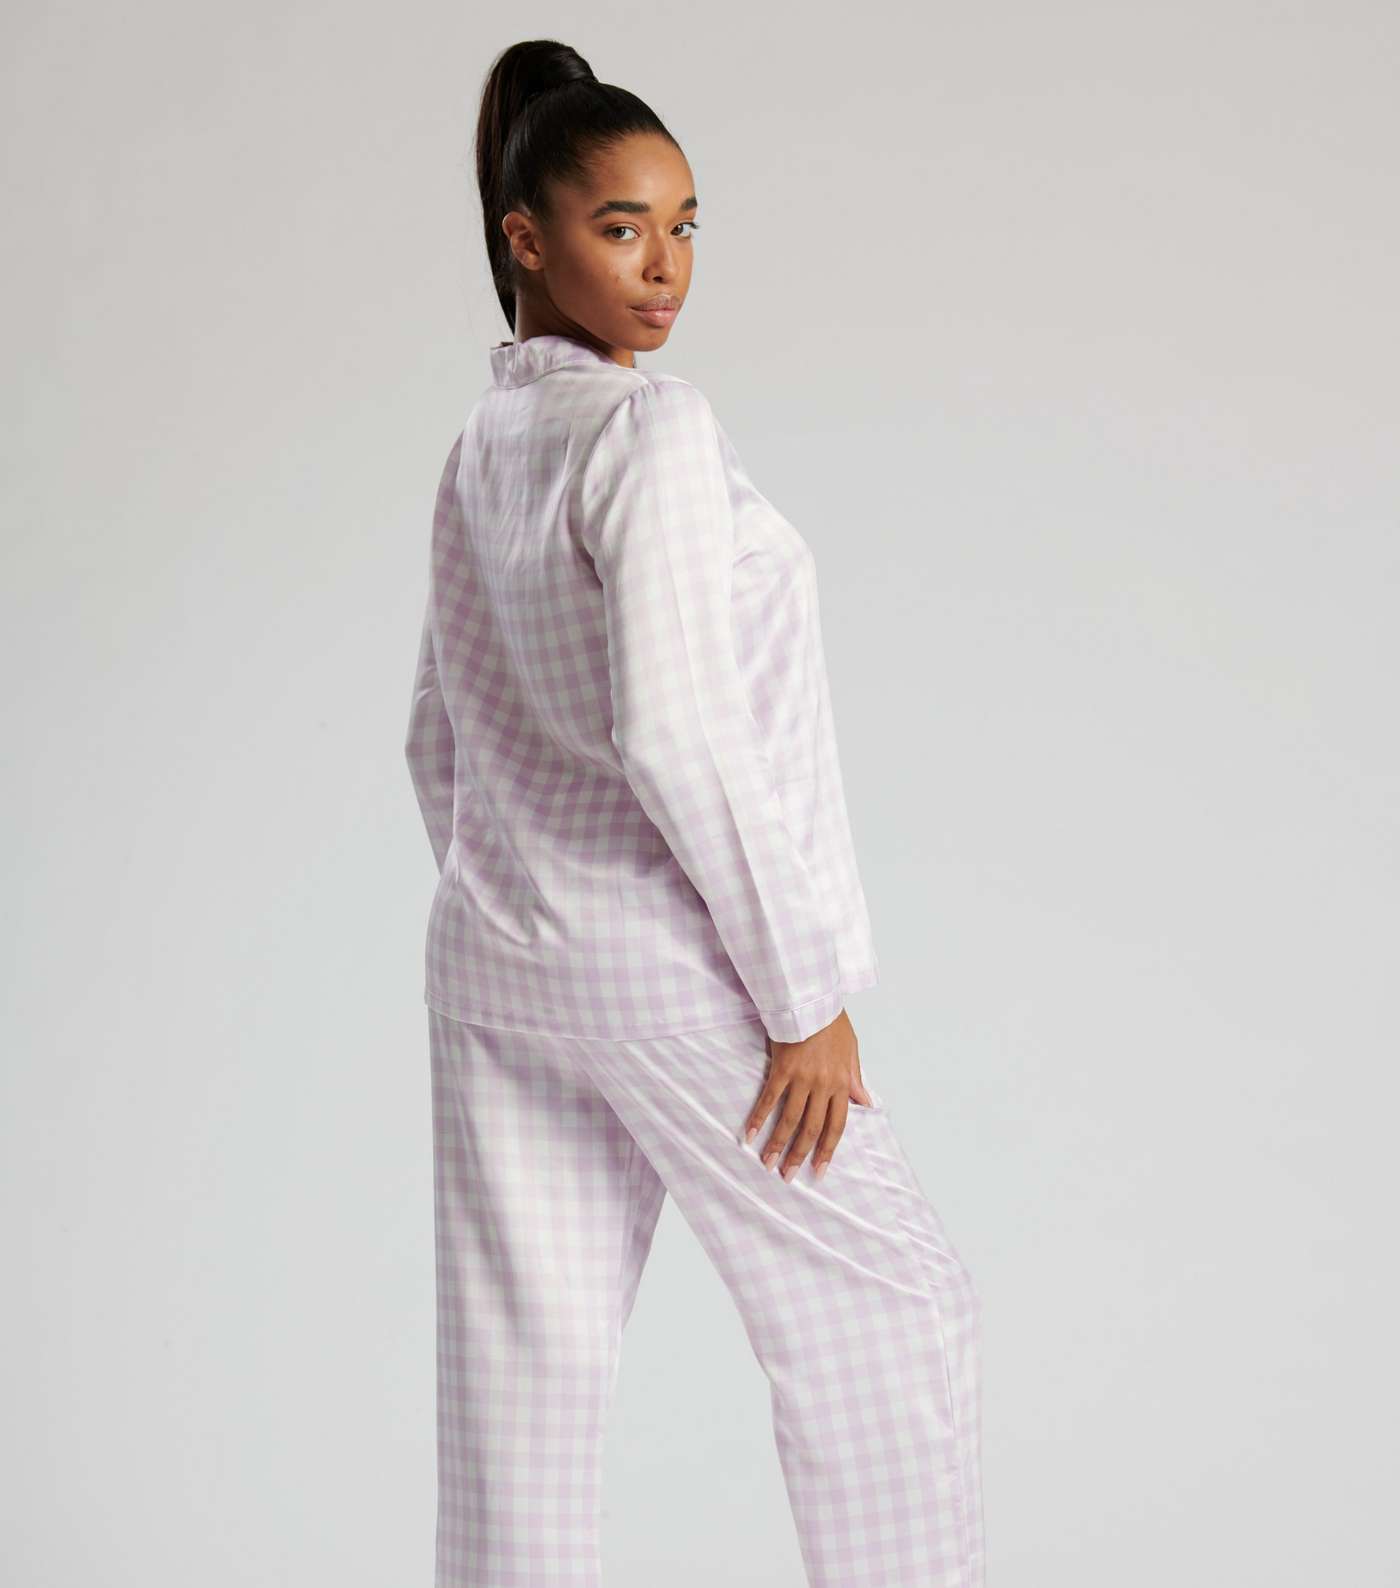 Loungeable Lilac Satin Pyjama Set with Gingham Print Image 2